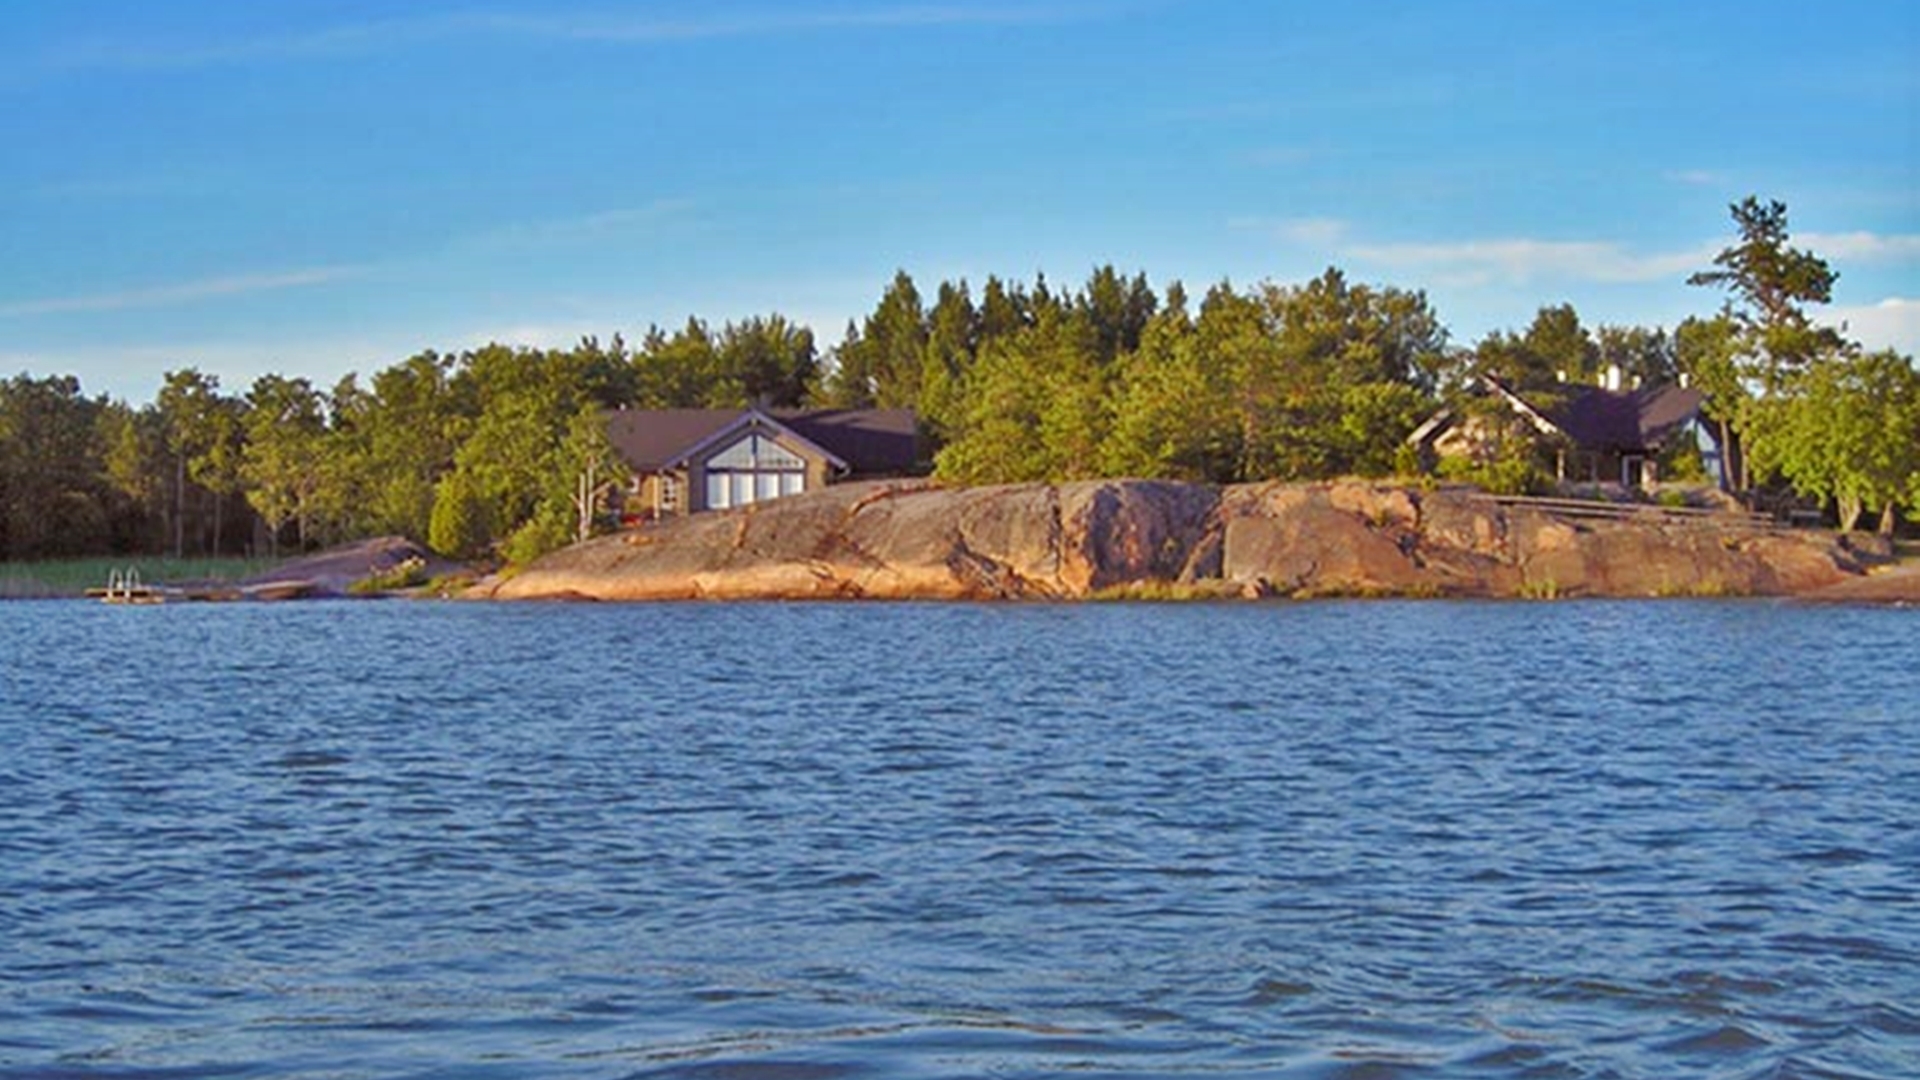 Turku Archipelago Teersalo island pike fishing